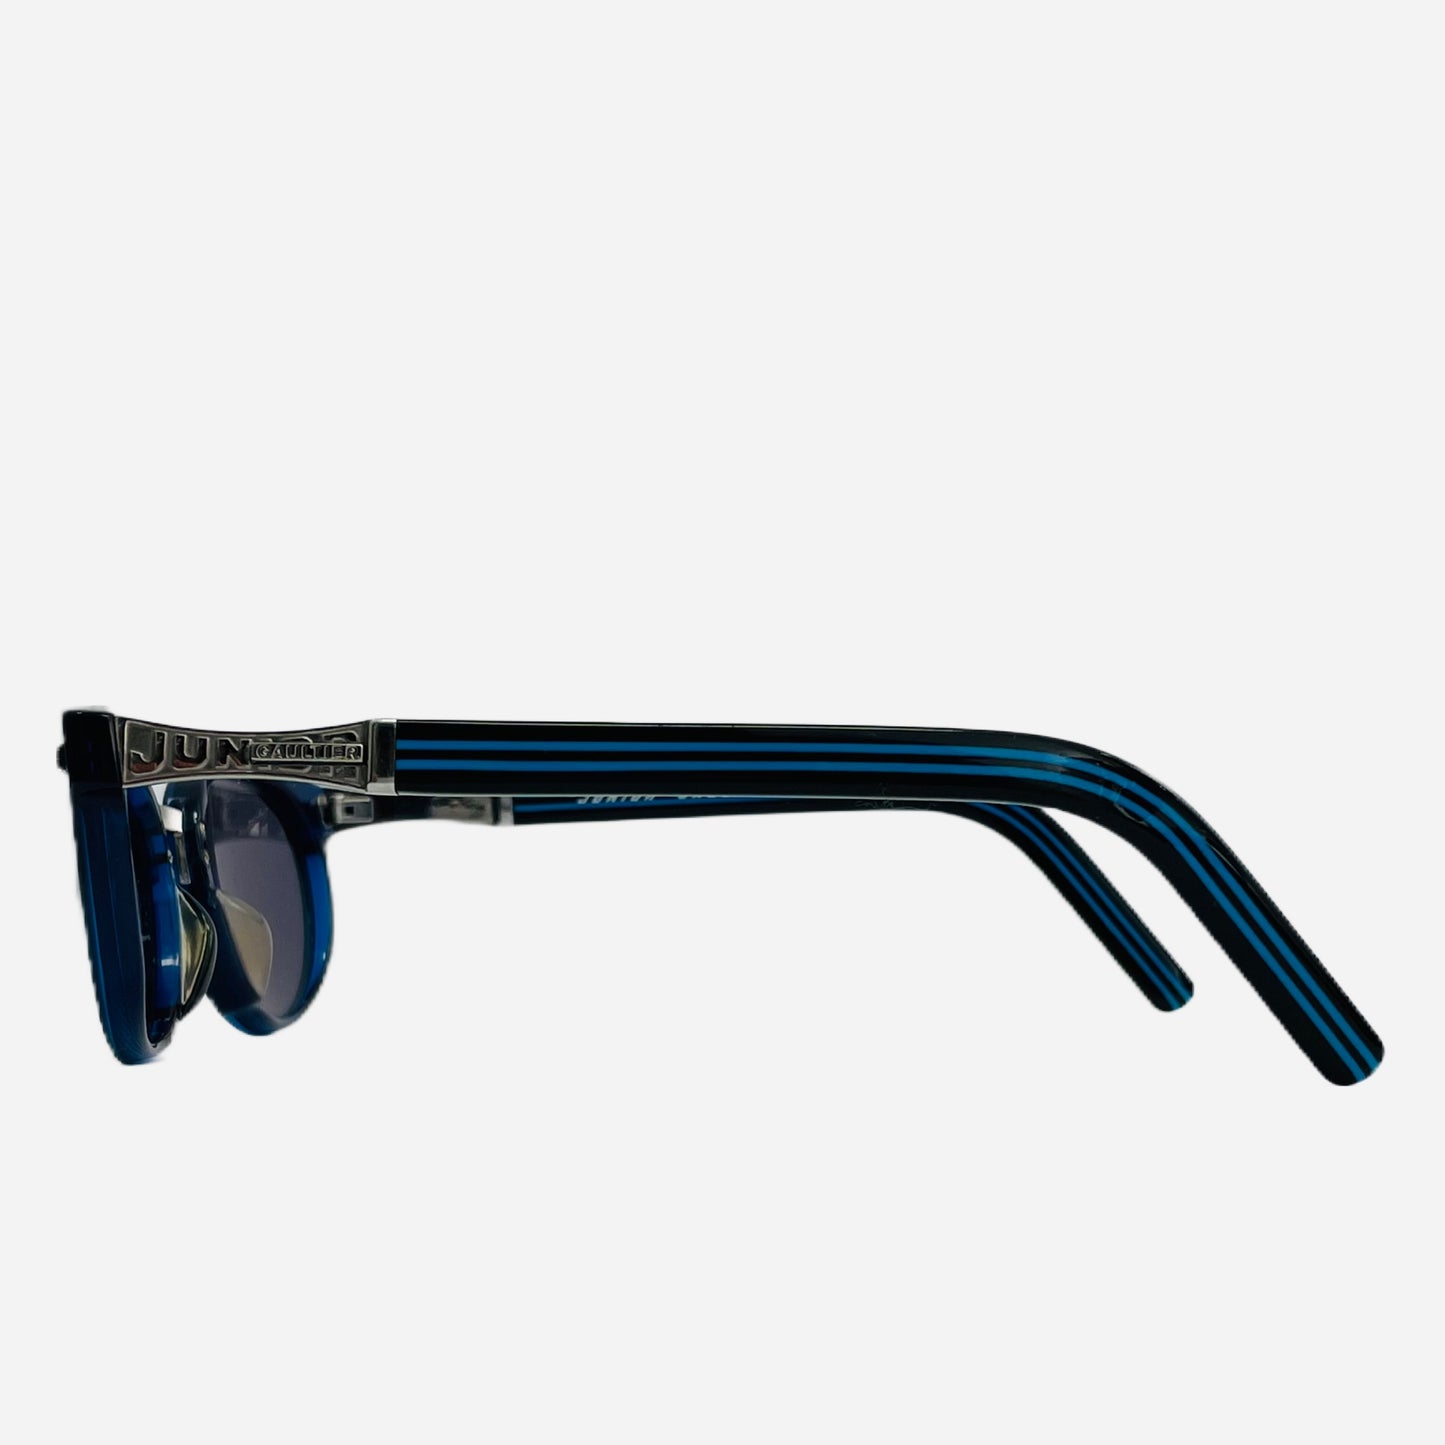 Jean-Paul-Gaultier-Junior-Gaultier-Sonnenbrille-Sunglasses-Modell-58-1272-the-seekers-vintage-designer-sunglasses-side